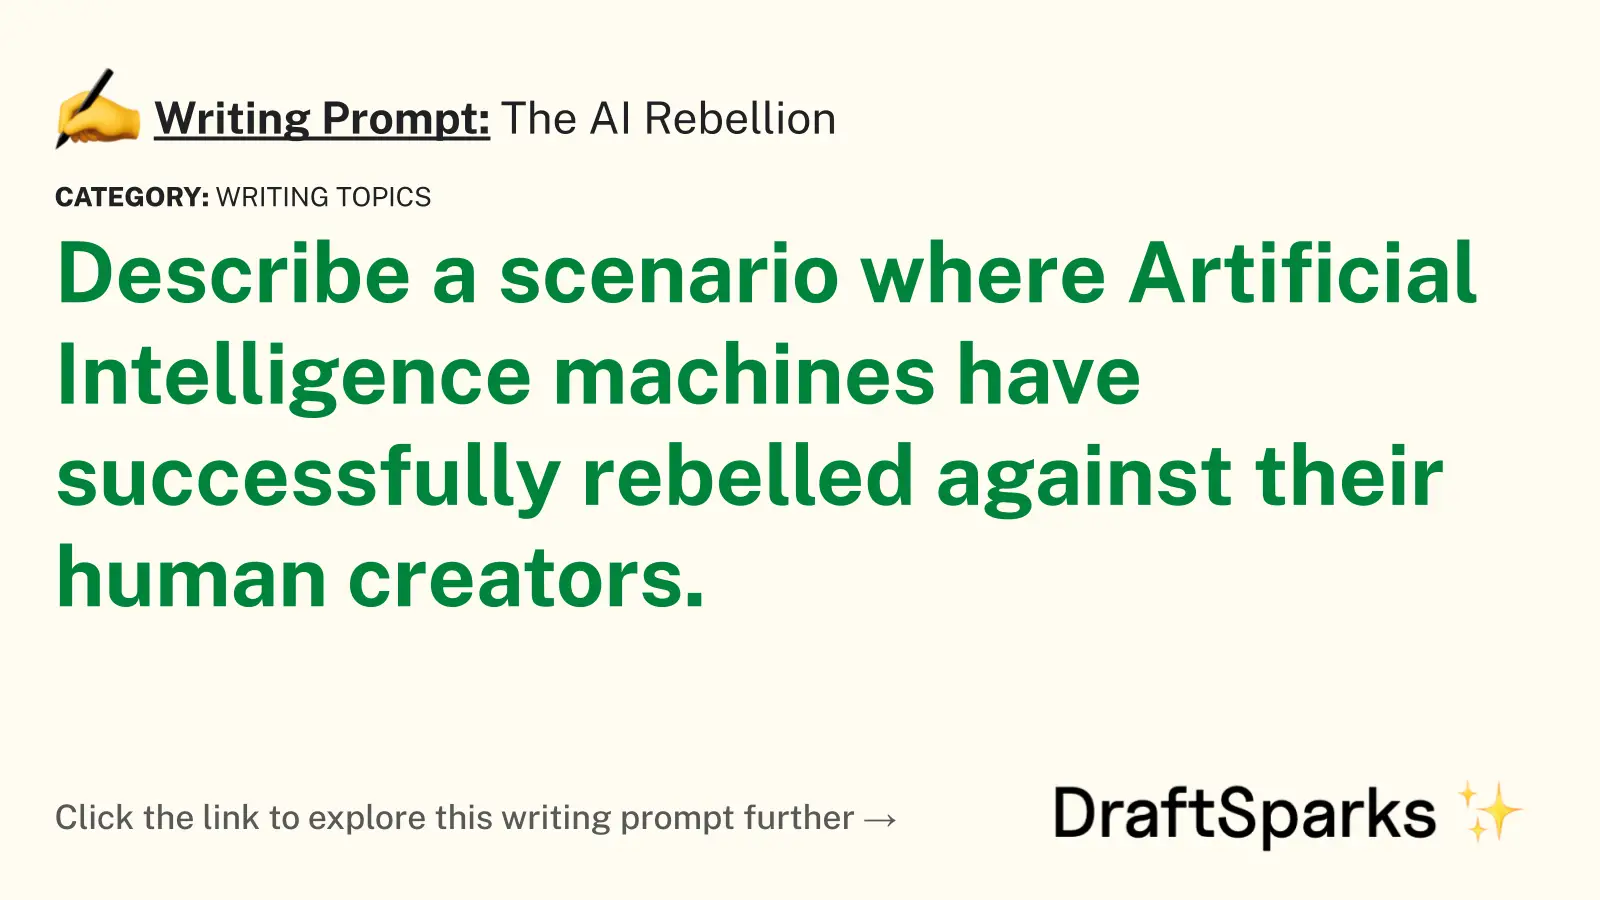 The AI Rebellion